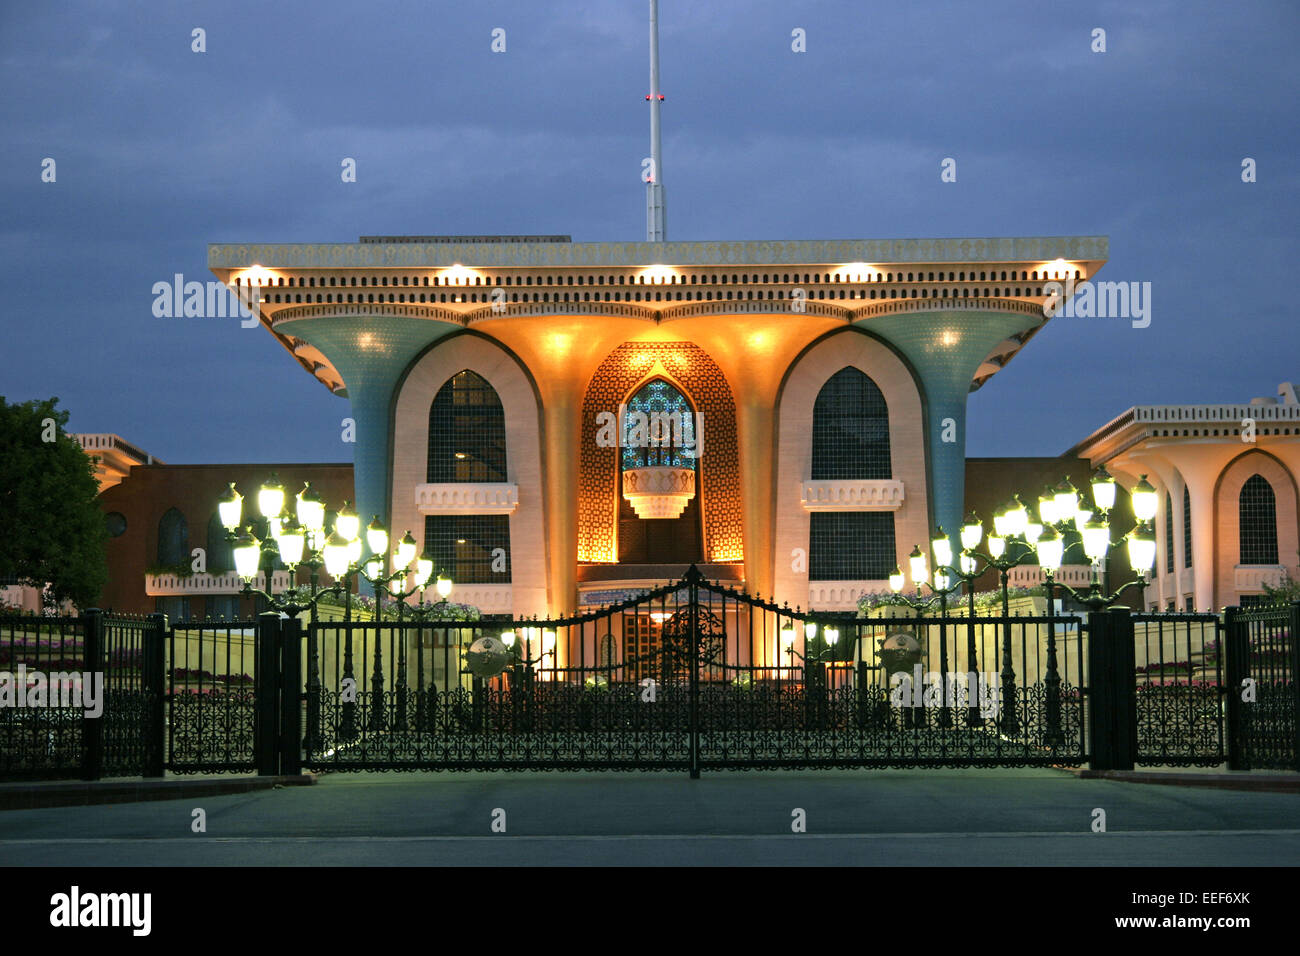 Oman Muscat Maskat Regierungspalast Masquat Palast Sultan Qaboos Qasr Al-Alam Gebaeude Eingangsbereich Nacht Abend Beleuchtet Ar Stock Photo